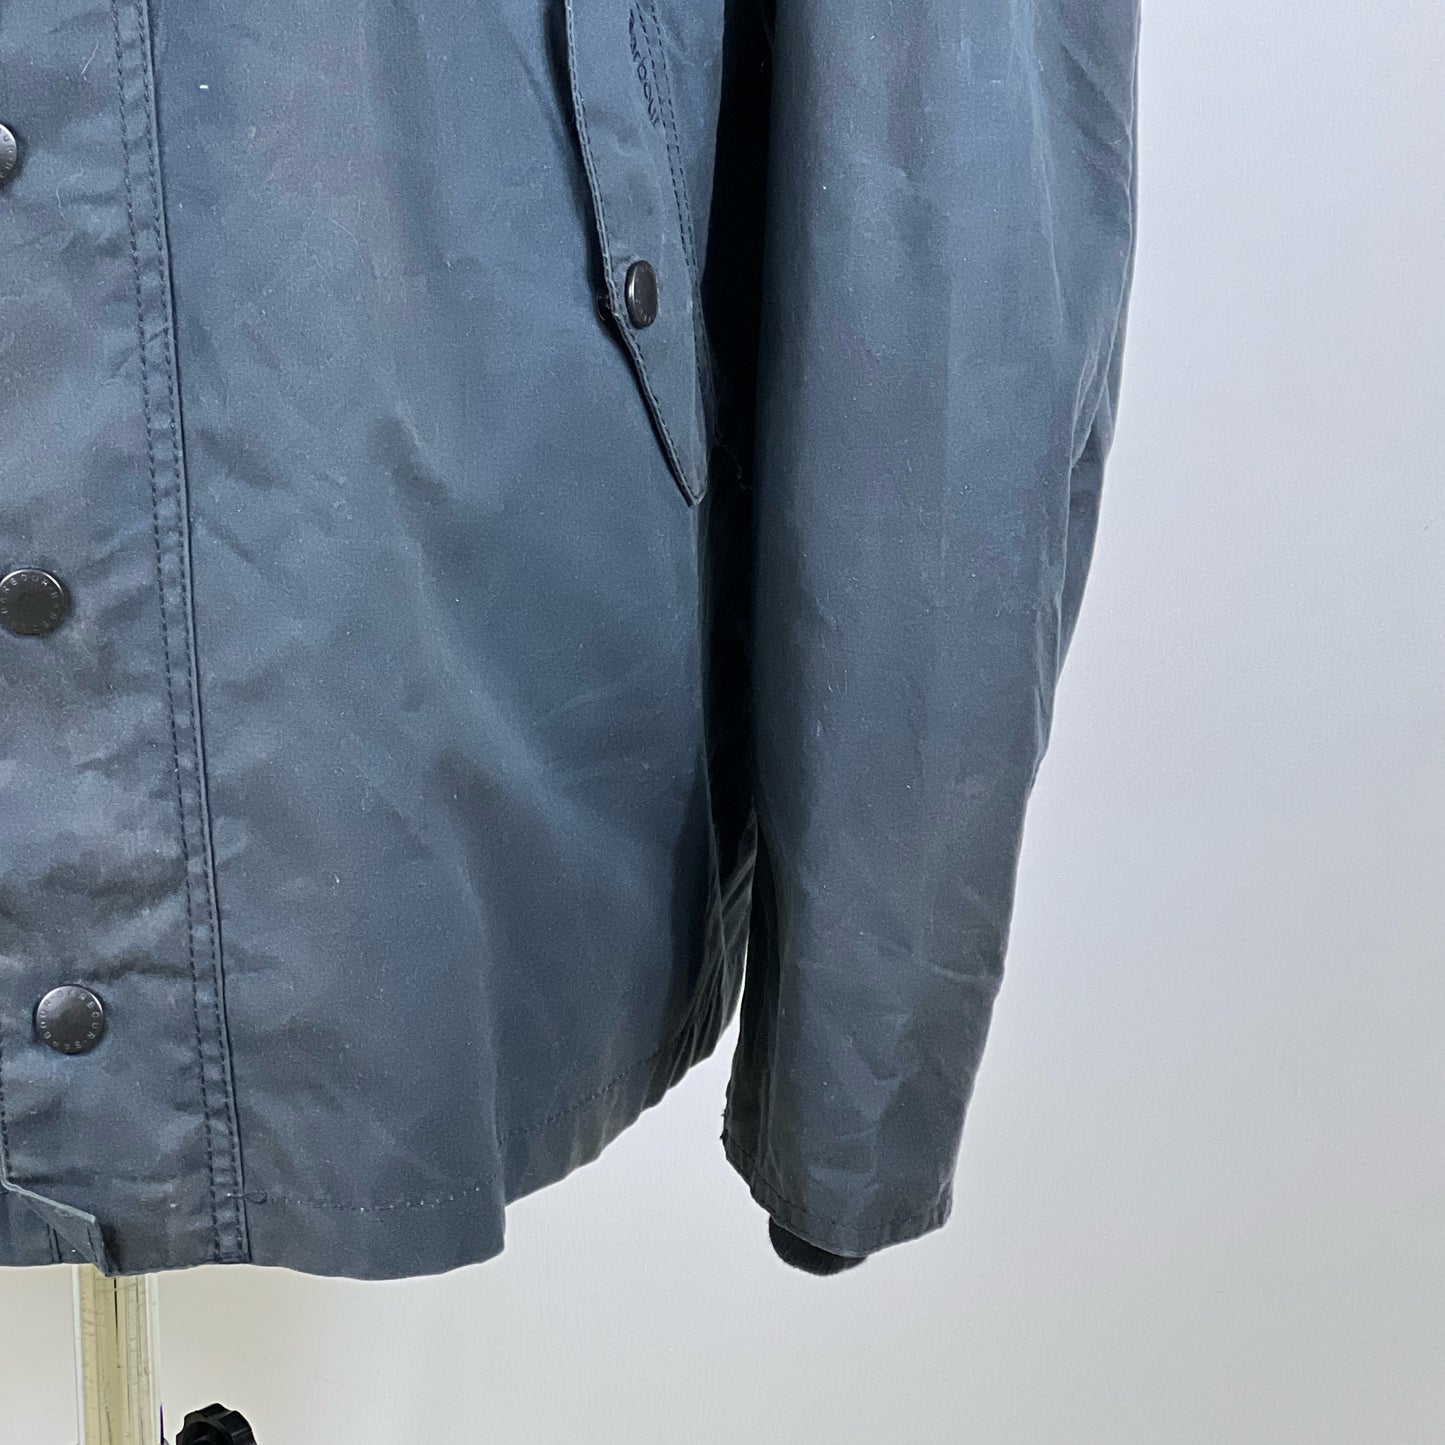 Giacca Barbour Heritage blu uomo cerata  XXLarge Man Navy Ash wax Heritage jacket Xxl